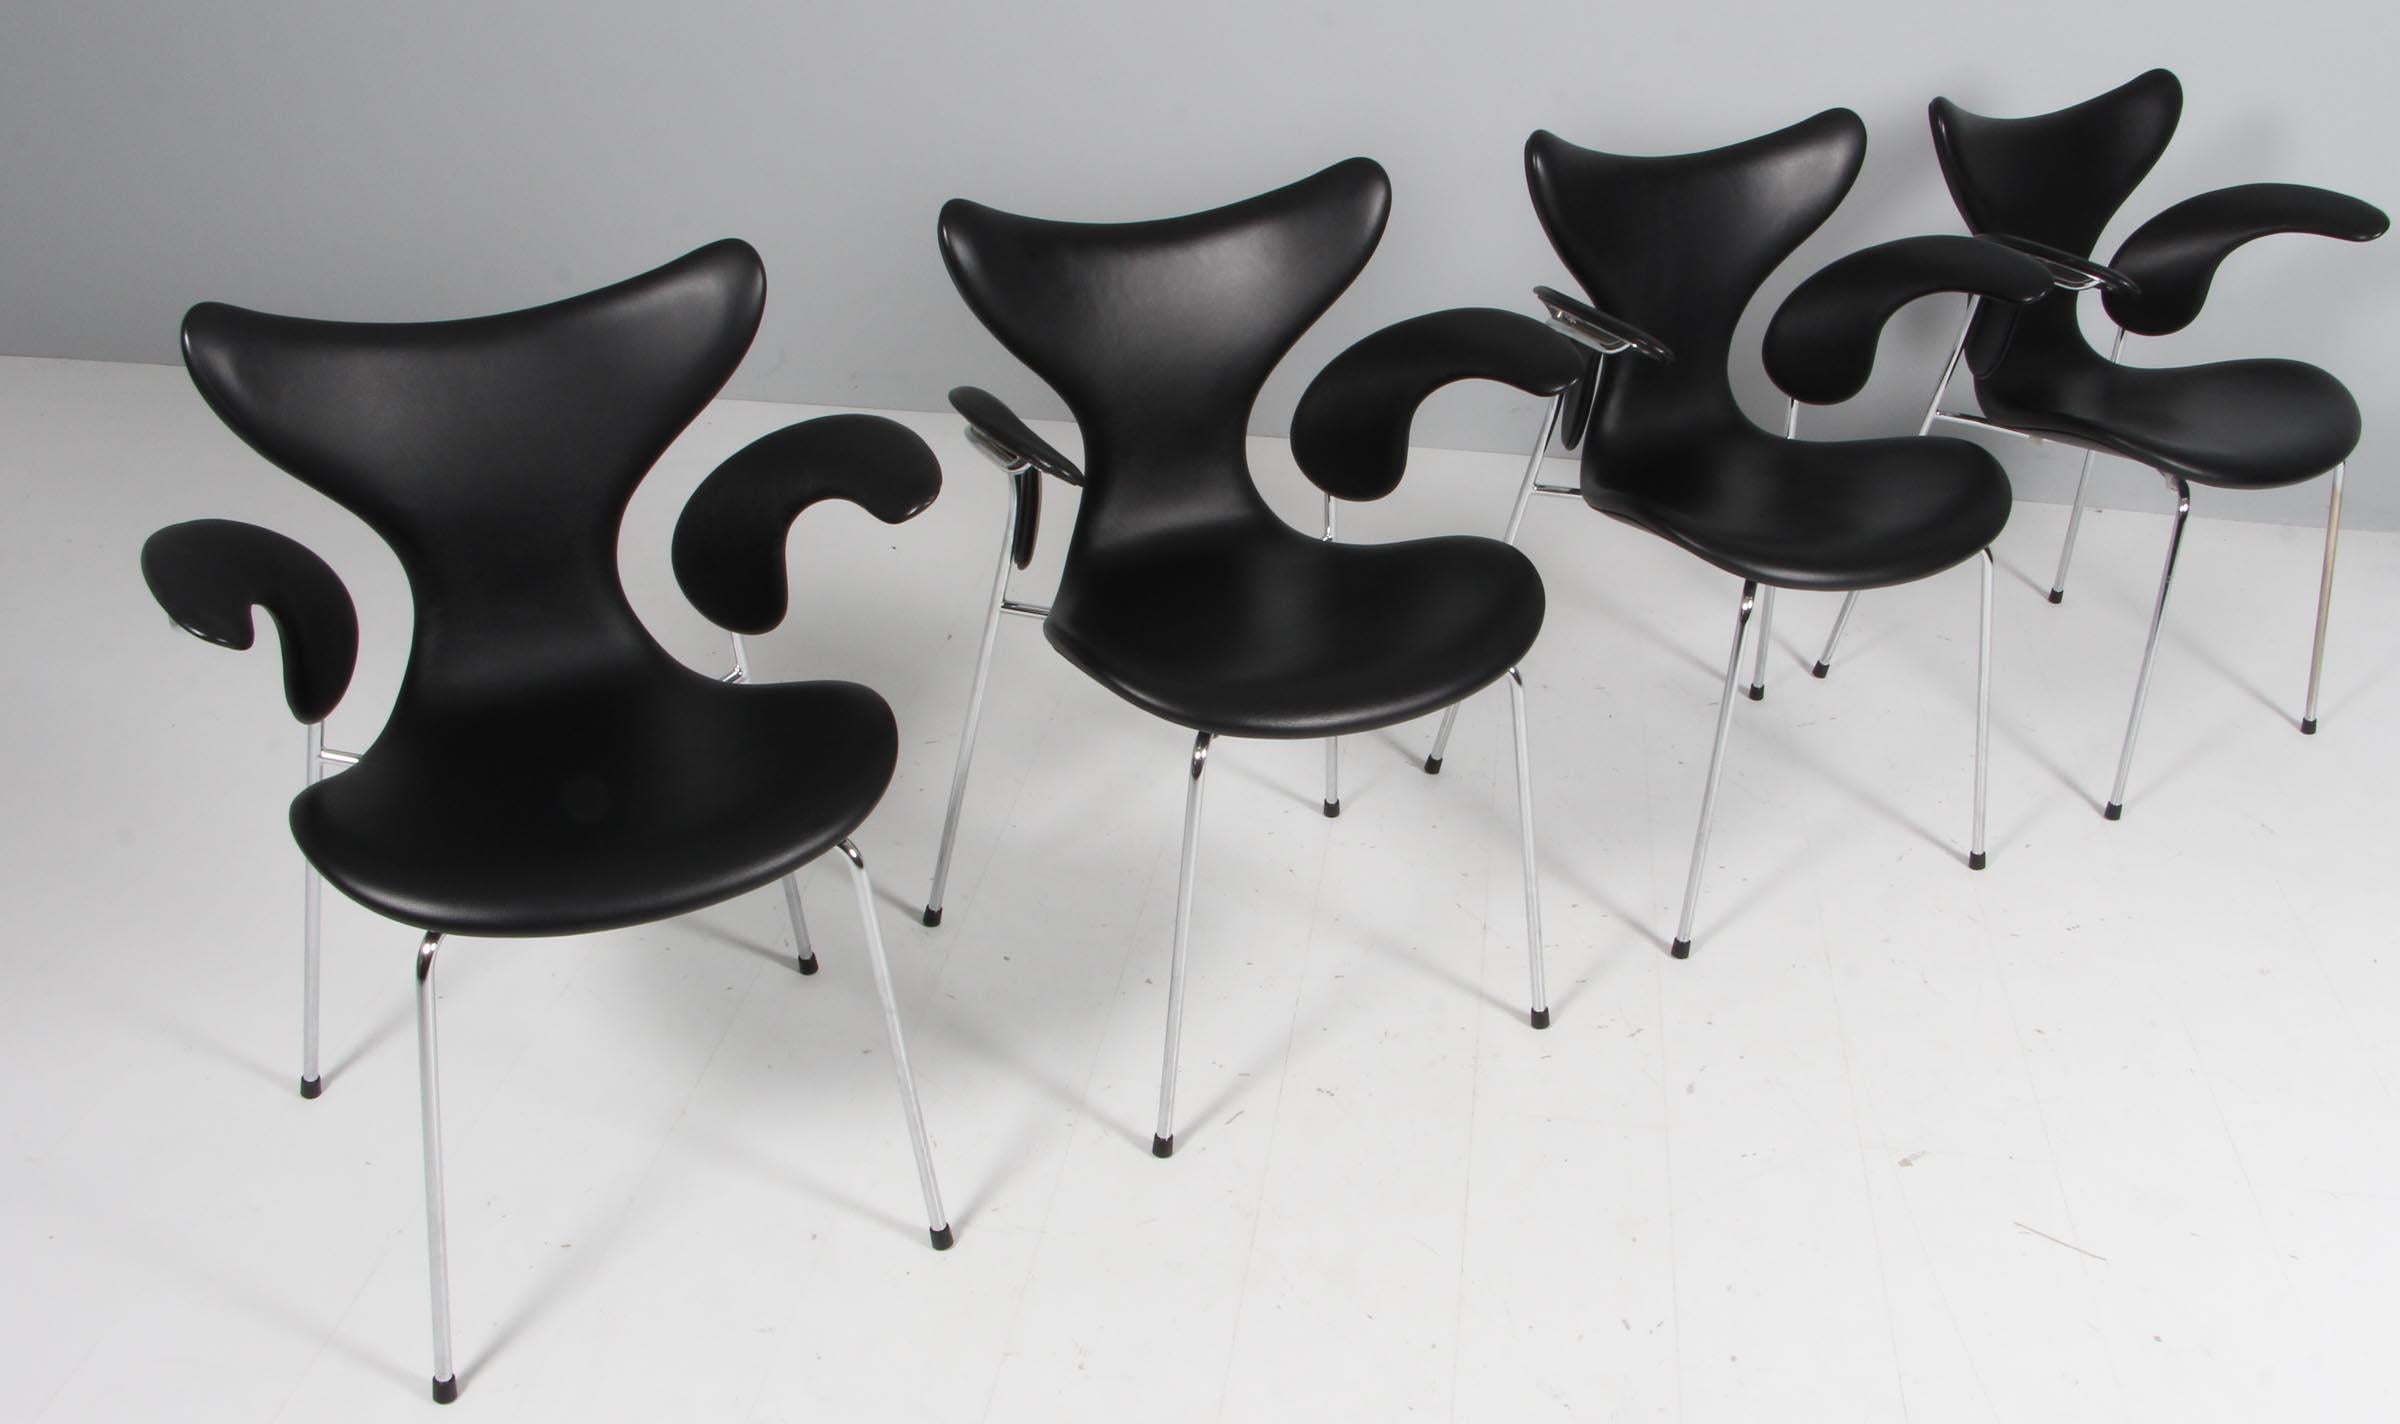 Arne Jacobsen dining armschair original upholstered with black leather.

Base of chromed steel tube.

Model 3208 Seagull, made by Fritz Hansen 2016. Brown label